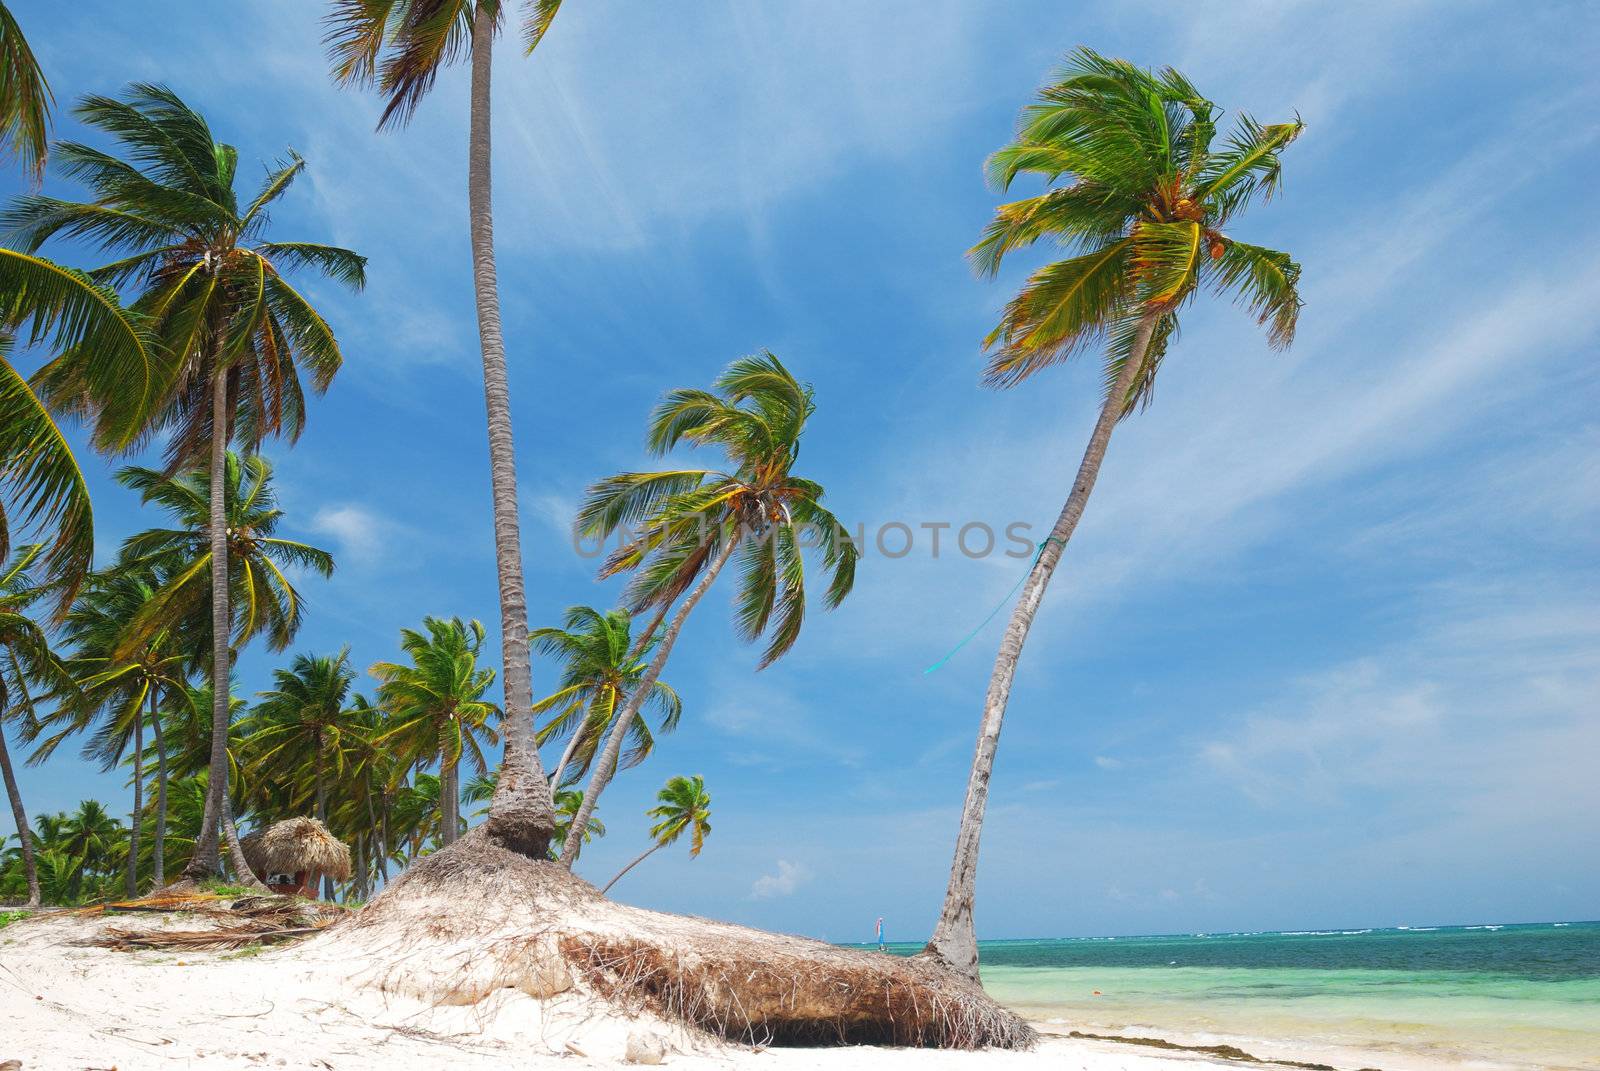 Wild caribbean beach in Dominican Republic